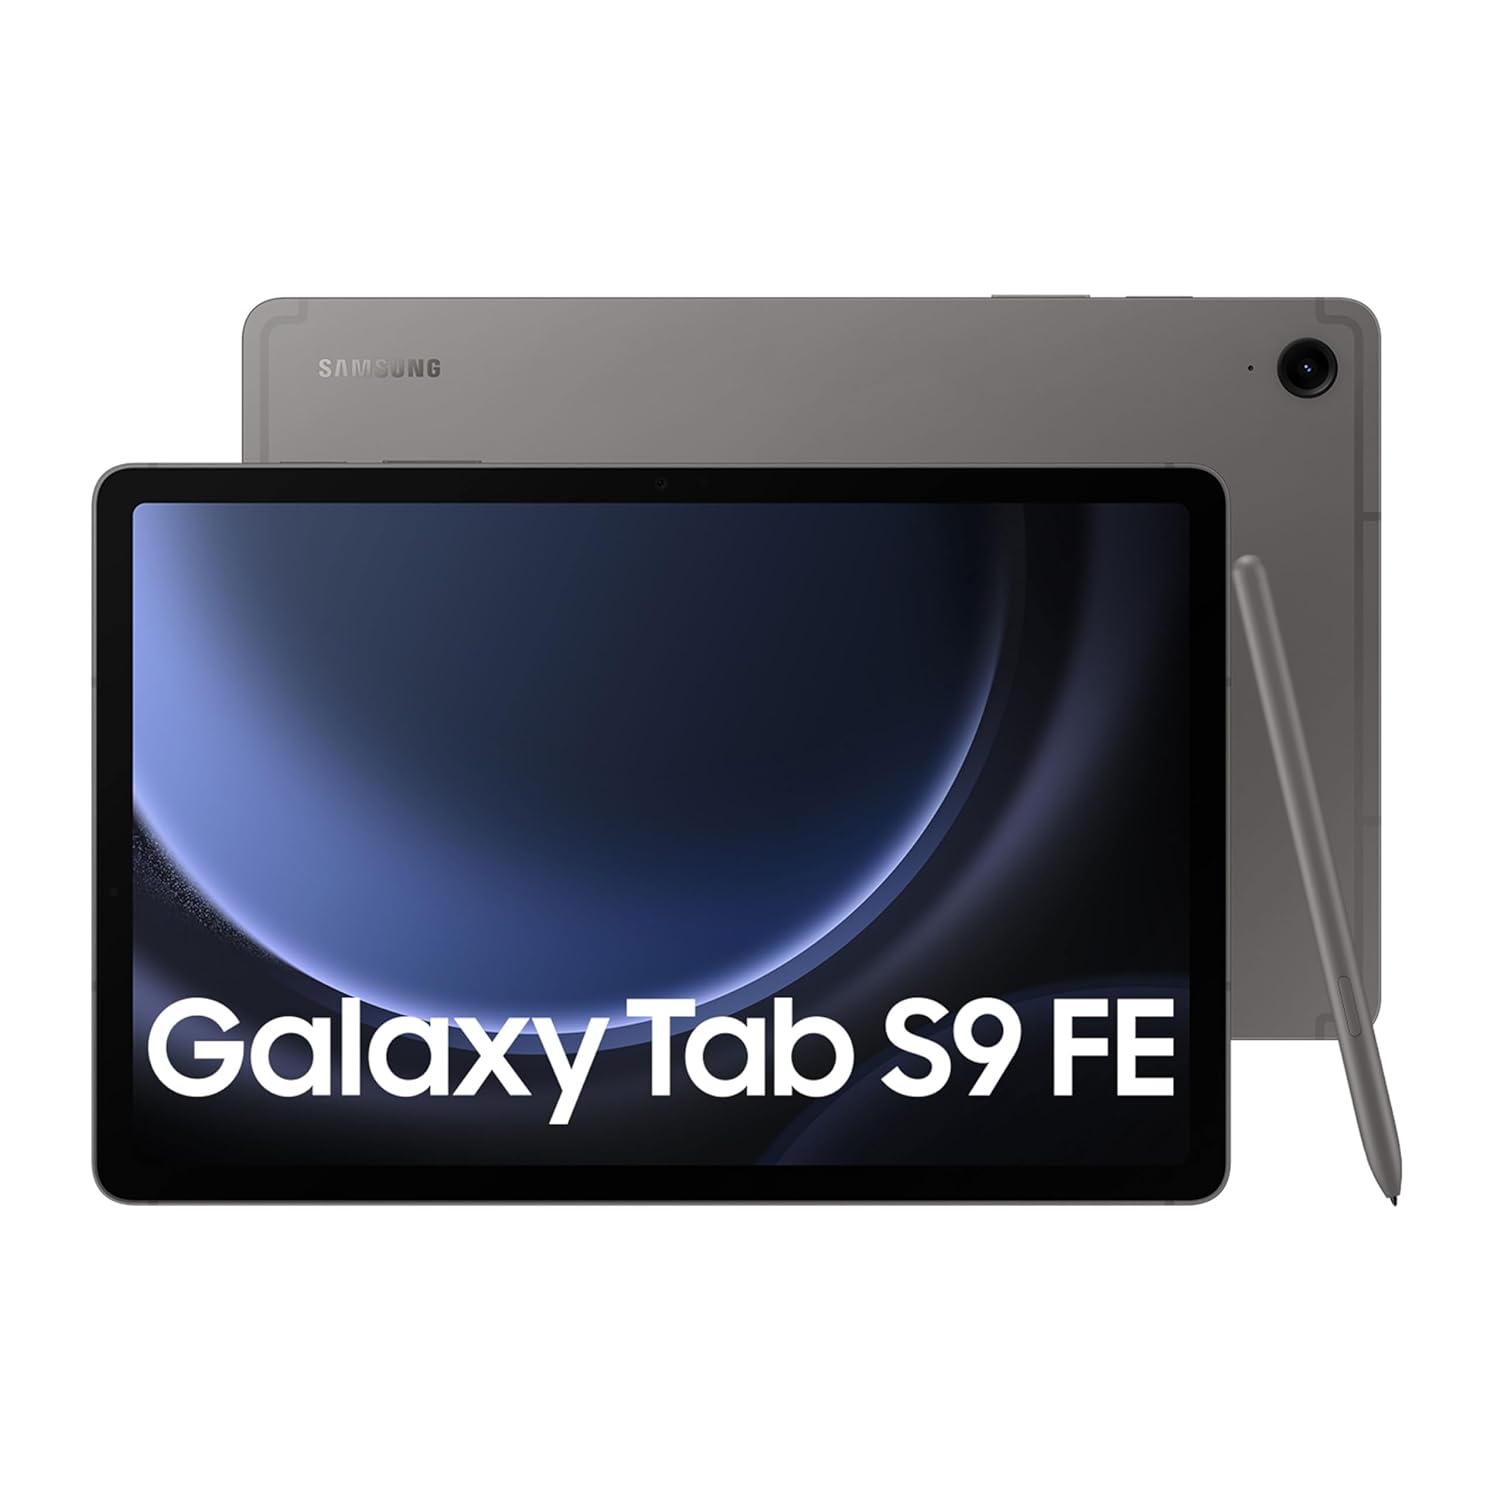 Samsung Galaxy Tab A9 Plus, Tab A9 4GB RAM 64GB ROM 11 Display 90Hz WiFi  Tablet